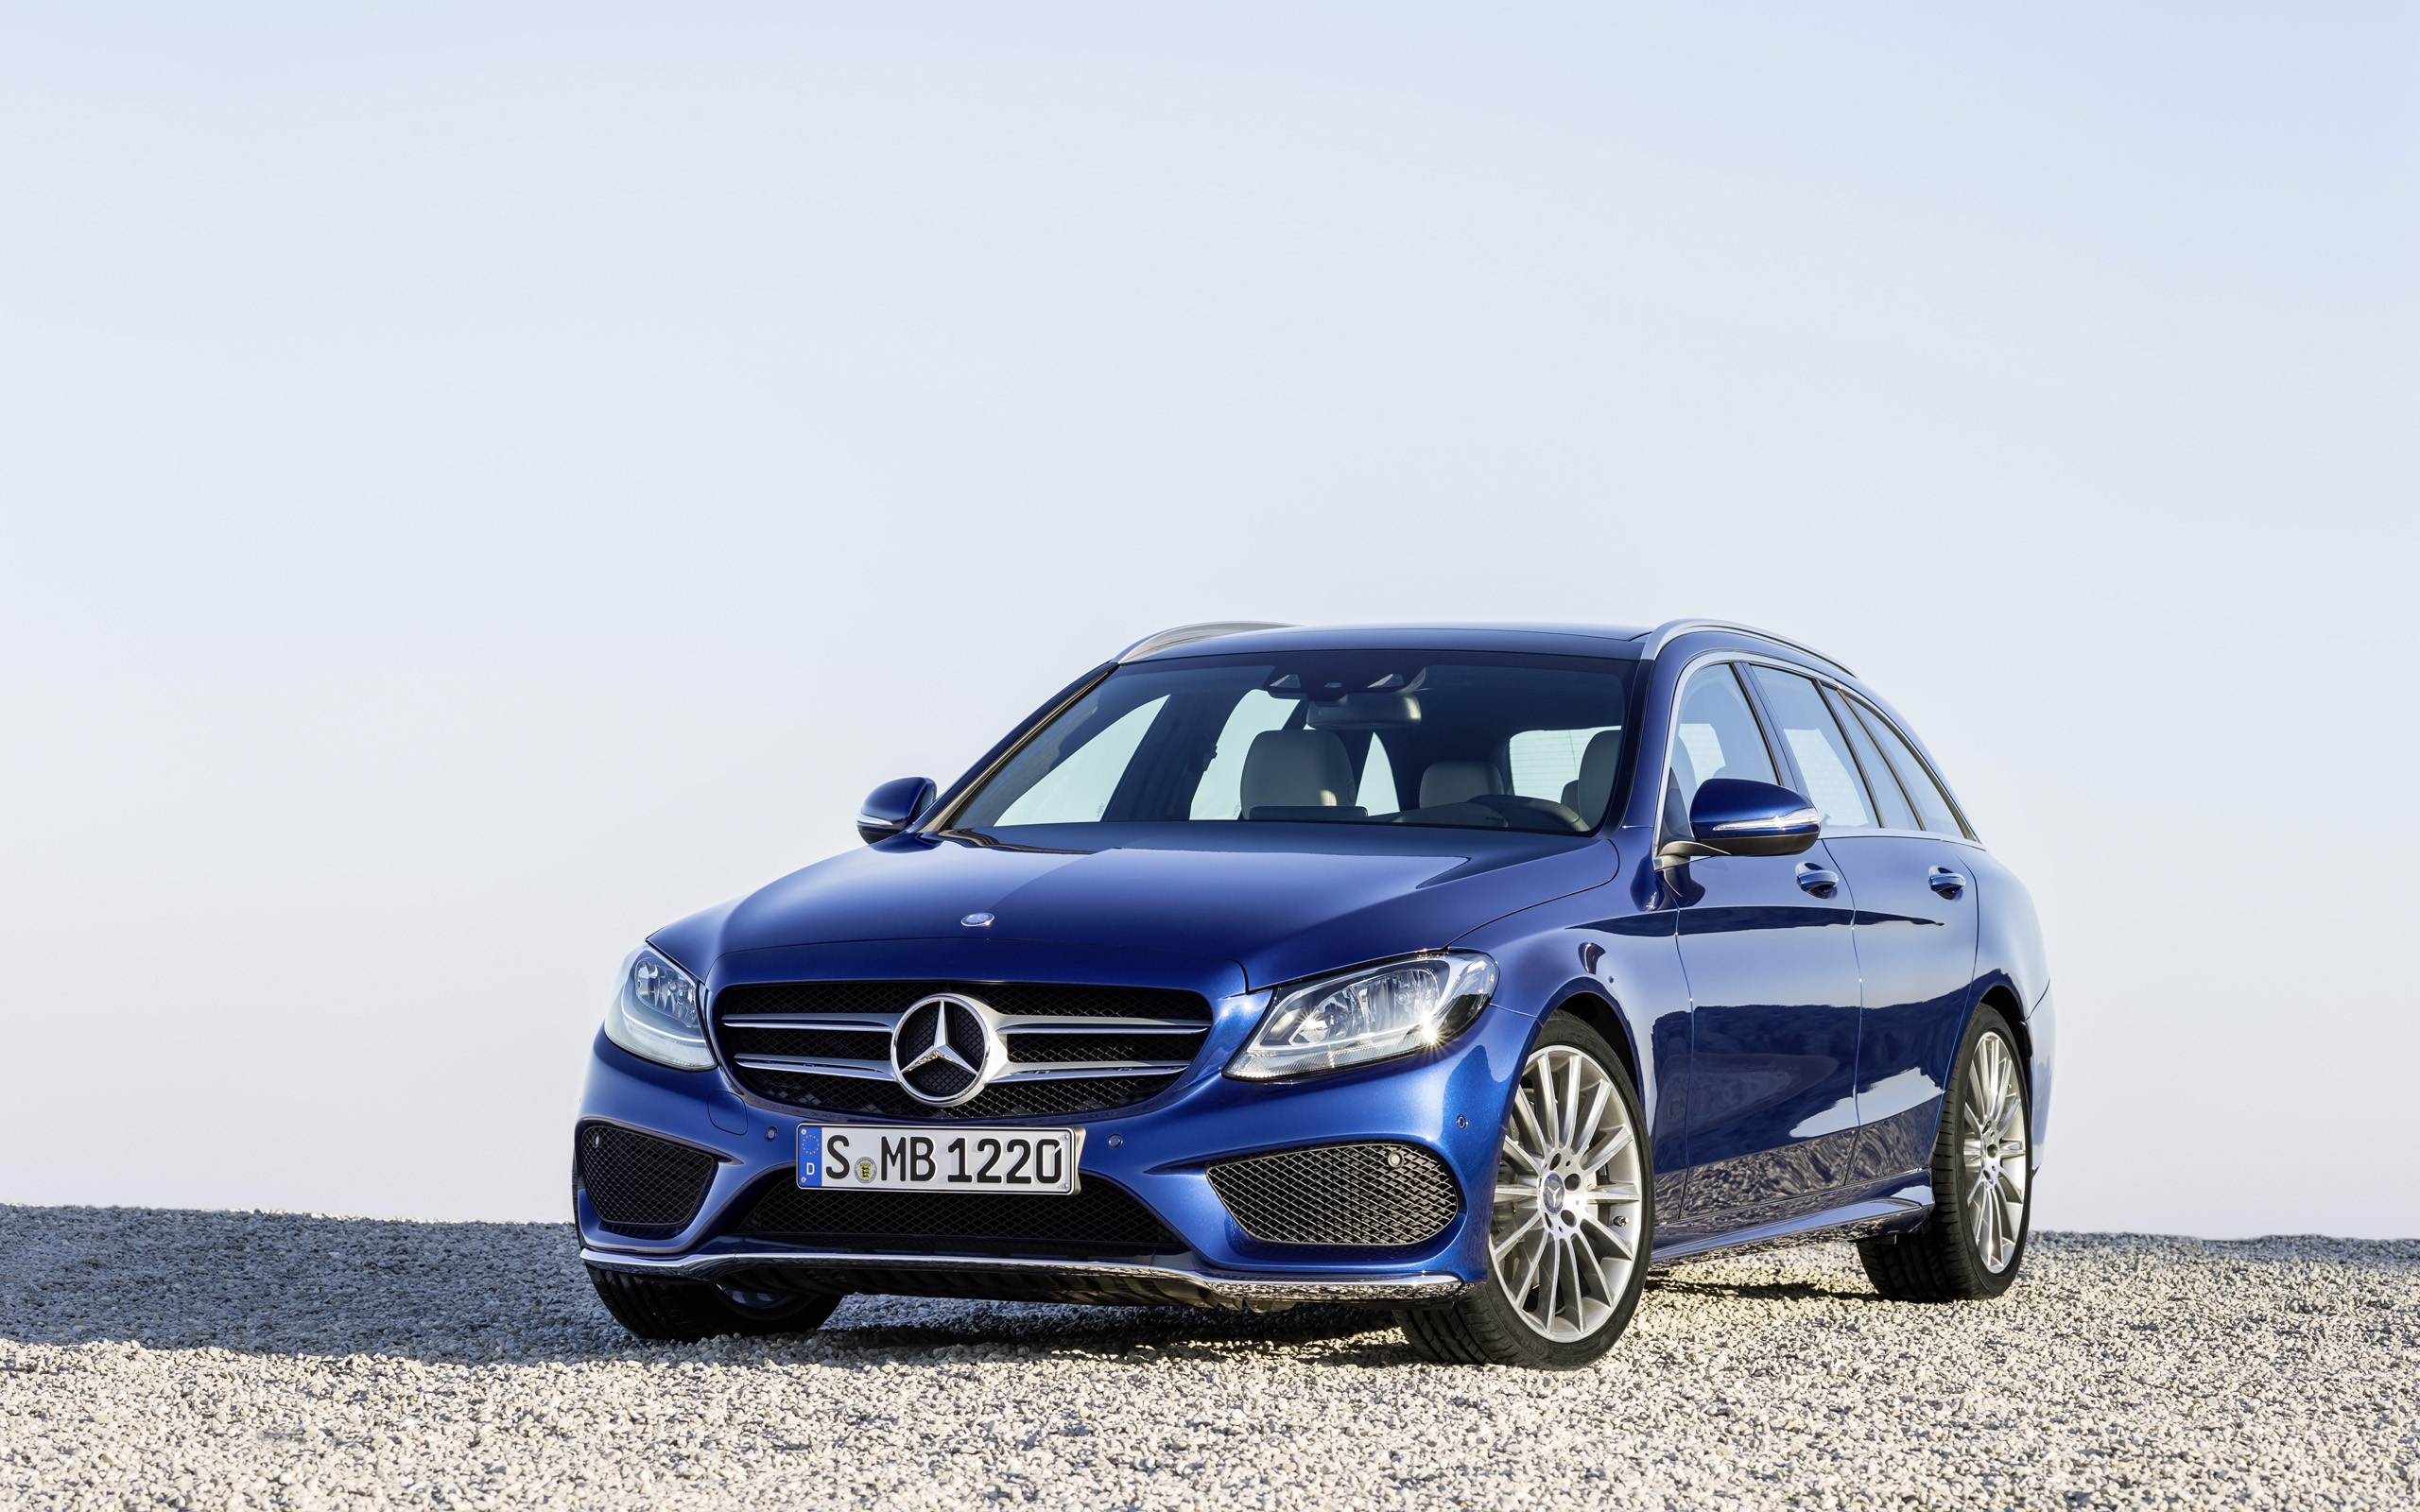 2015 Mercedes Benz C Class Estate Blue Wallpaper | HD Car Wallpapers ...